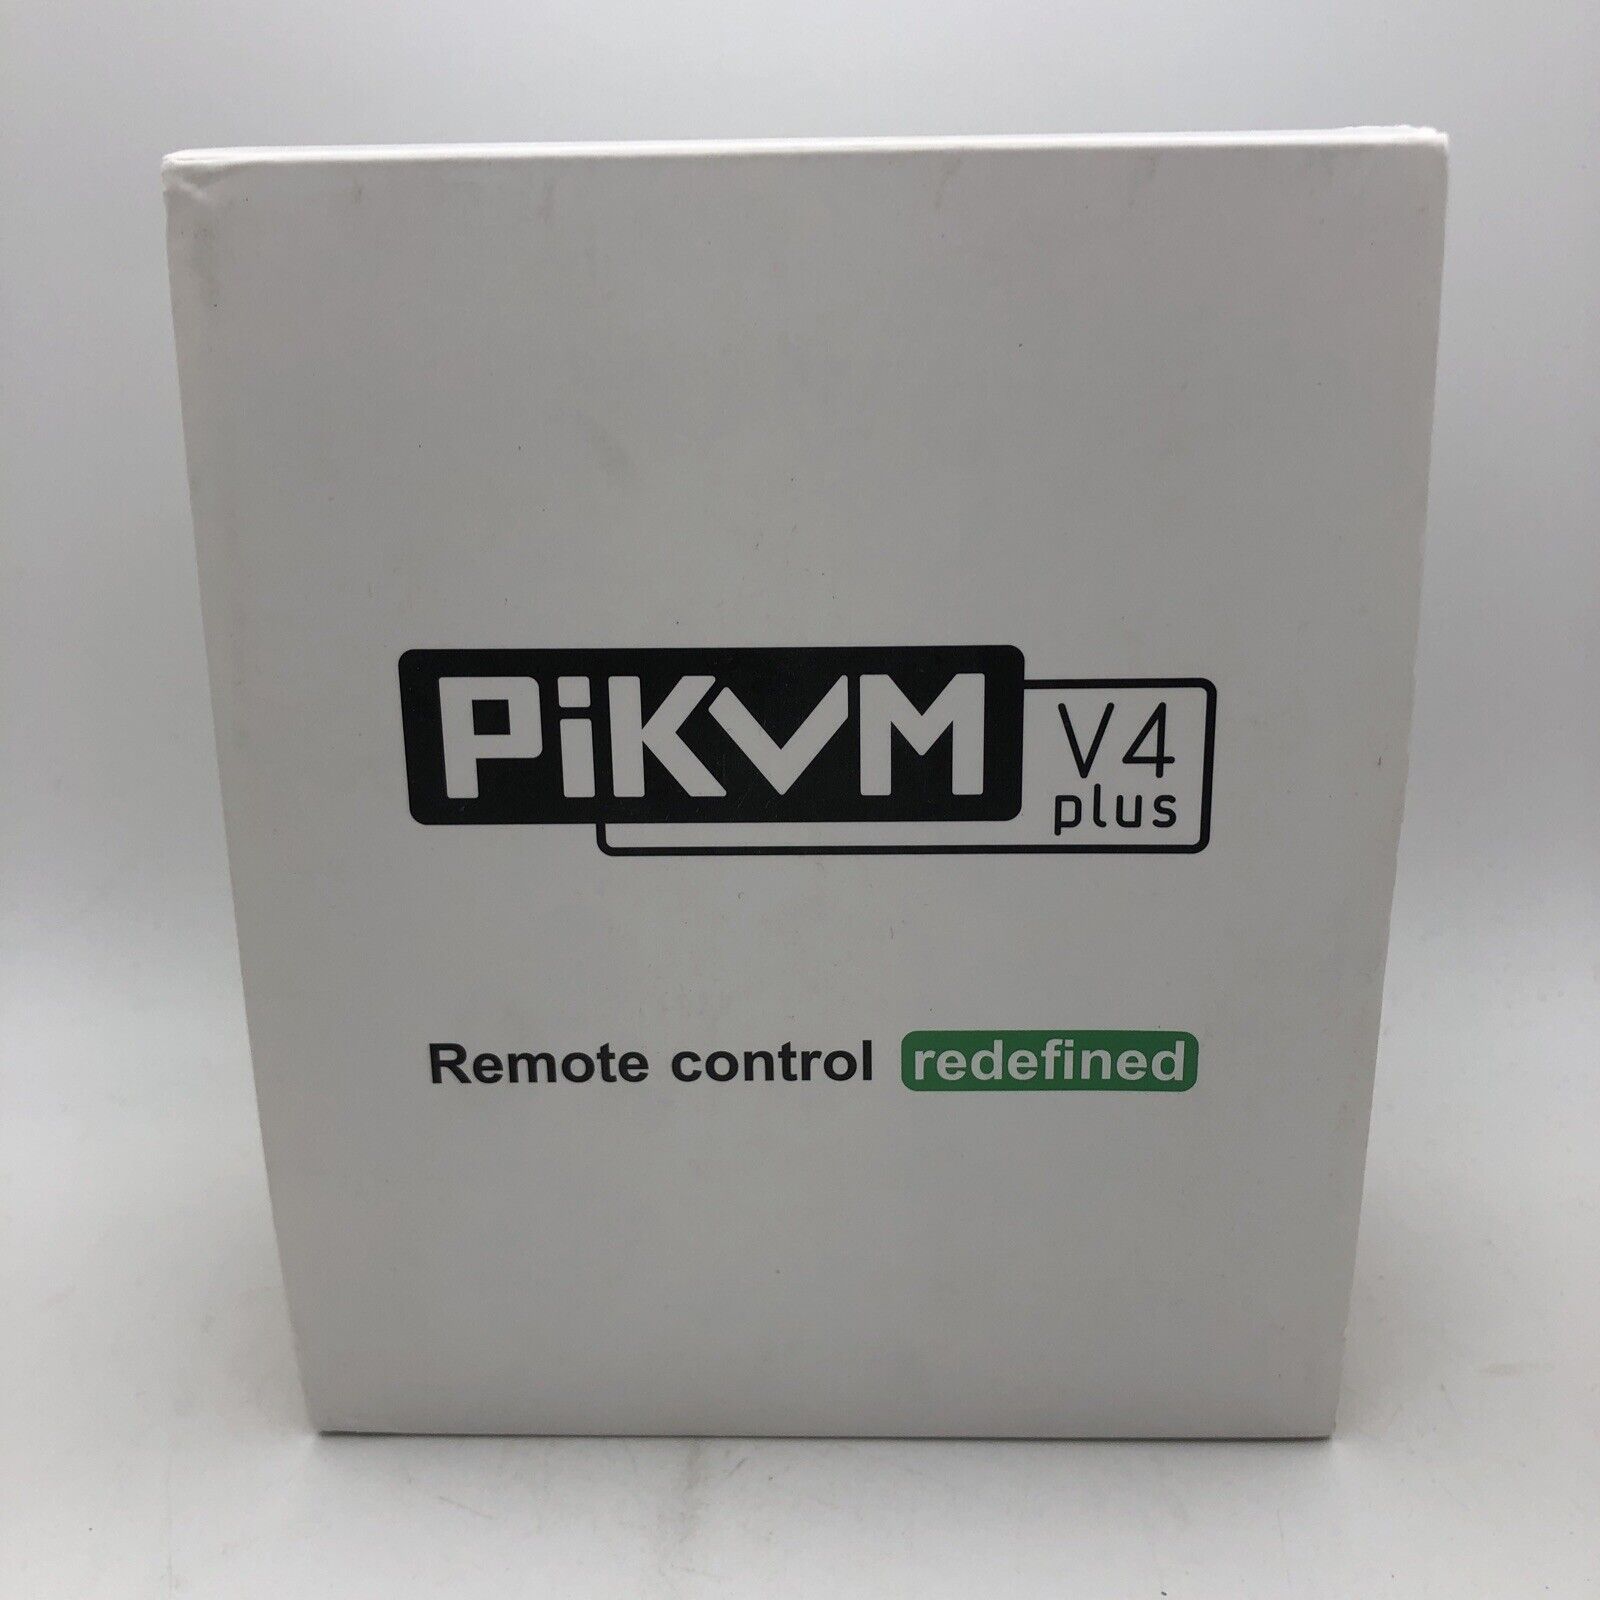 PiKVM V4 Plus Raspberry Pi based KVM Switch Device Brand New In Box 